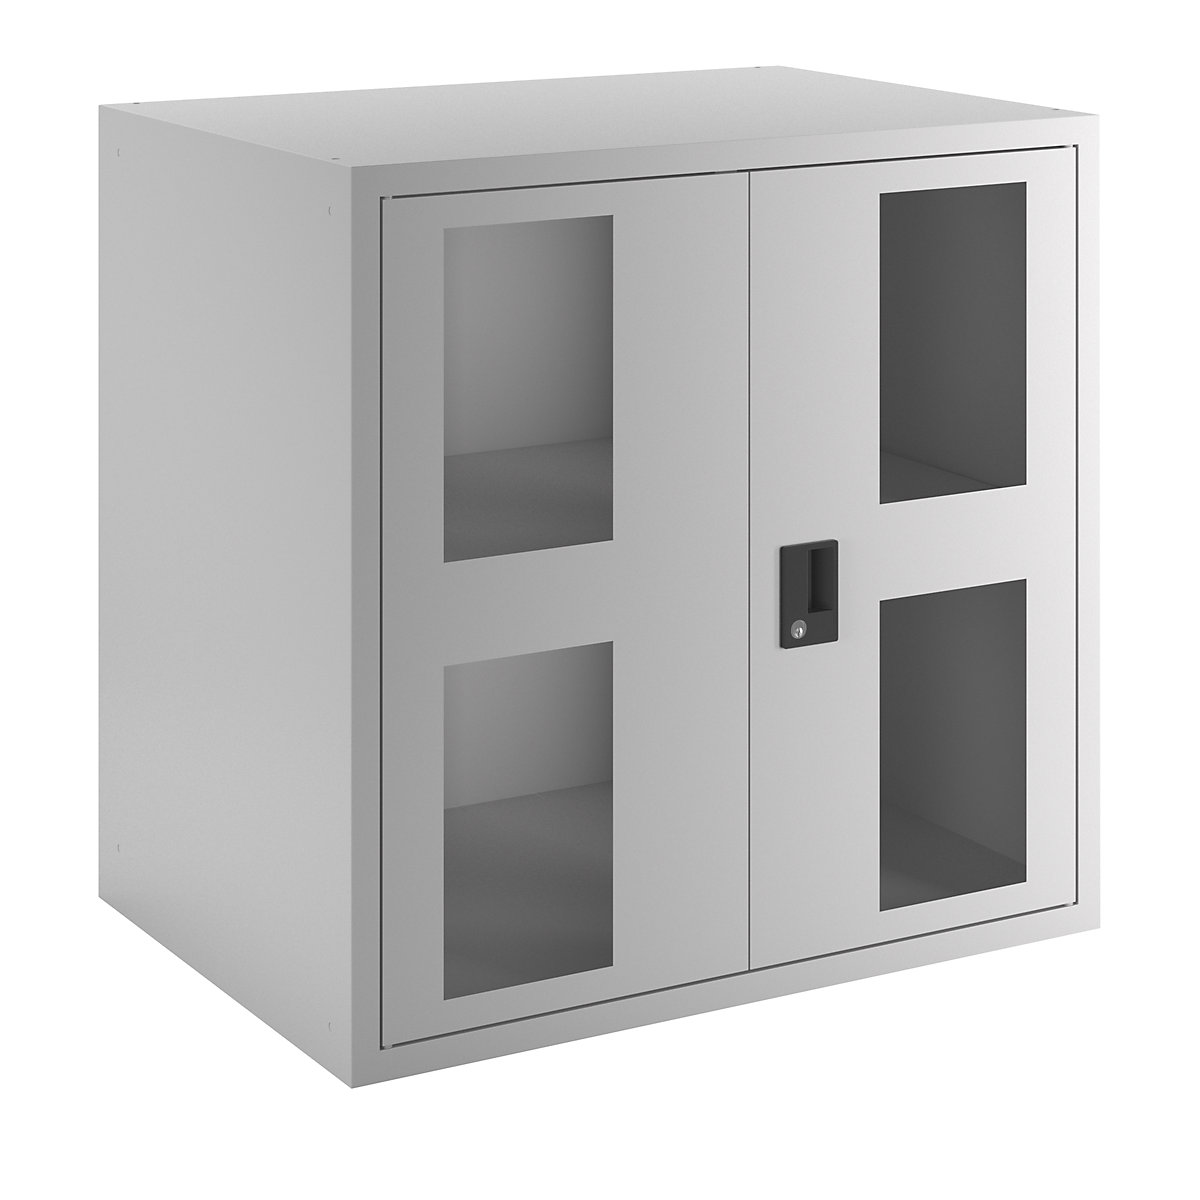 Add-on cupboard with hinged doors – LISTA